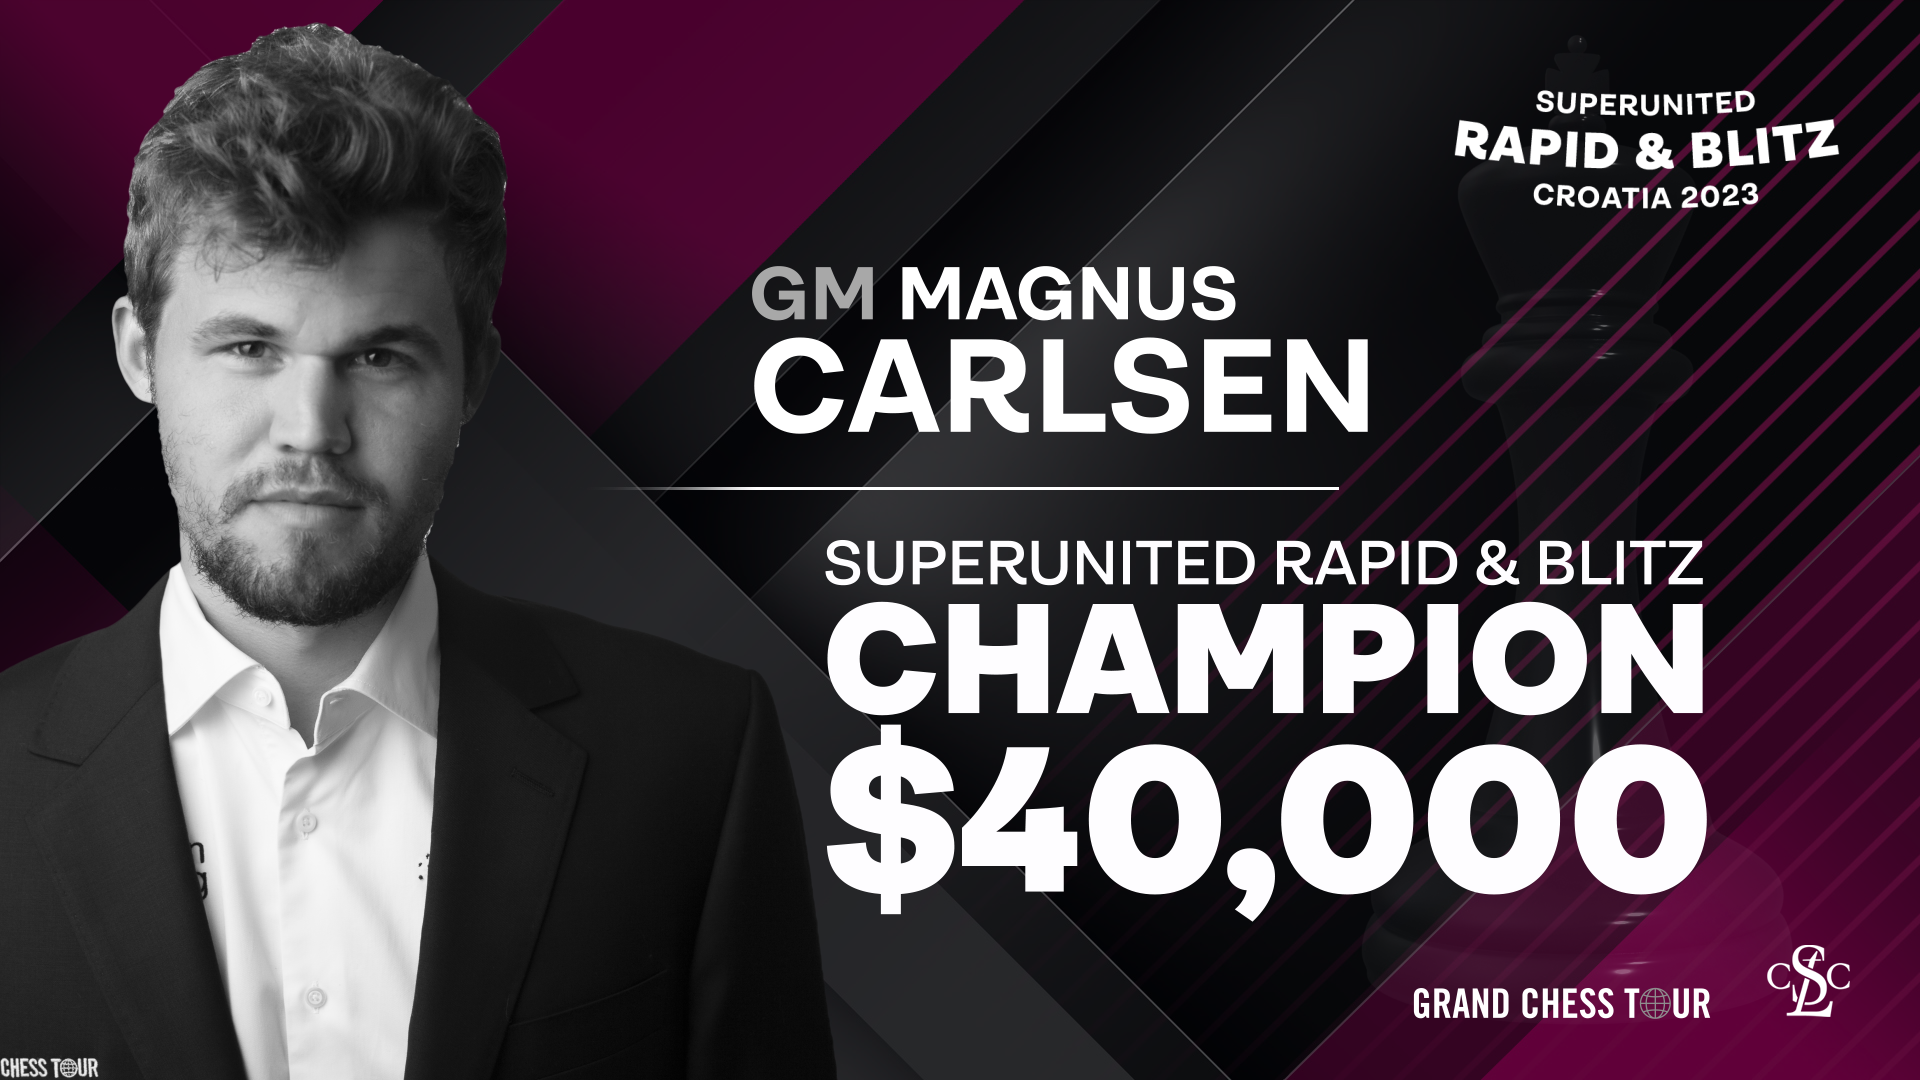 Carlsen wins SuperUnited Rapid and Blitz Championship in Croatia